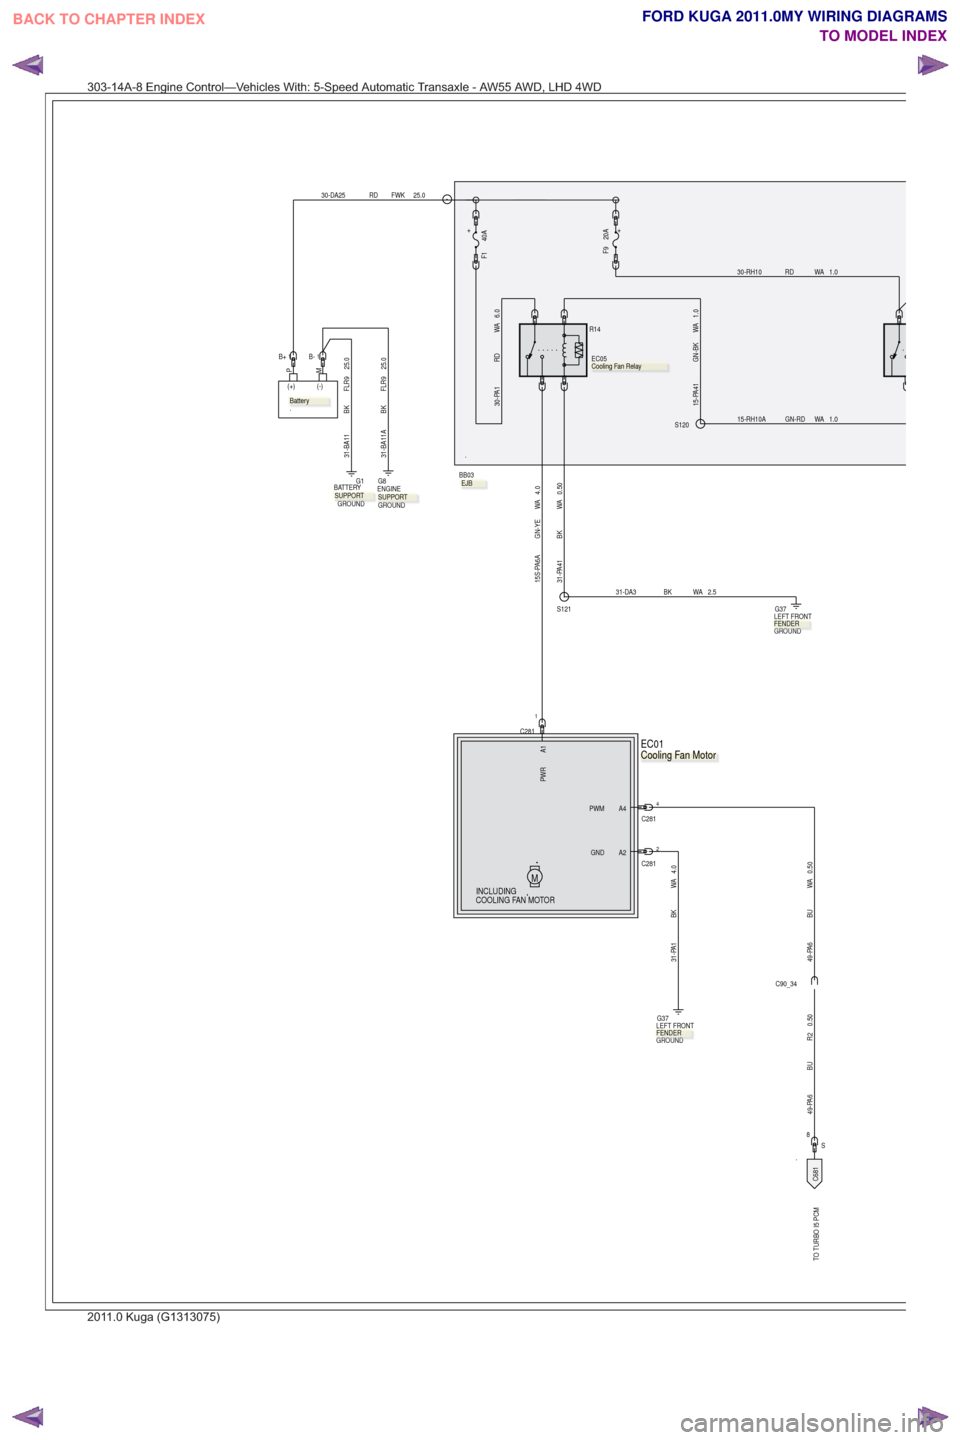 FORD KUGA 2011 1.G Wiring Diagram Workshop Manual .
TO TURBO I5 PCM
4.0
WA
BK
31-PA1
C281
4
0.50
WA
BU
49-PA6
A4
PWM
A2
GND
PWR A1
INCLUDING
COOLING FAN MOTORM
EC01.
25.0
FWK
RD
30-DA25
PM
(+) (-)
.
B+11B-
GROUND
ENGINE
G8
G1
BATTERY
GROUND
25.0
FLR9